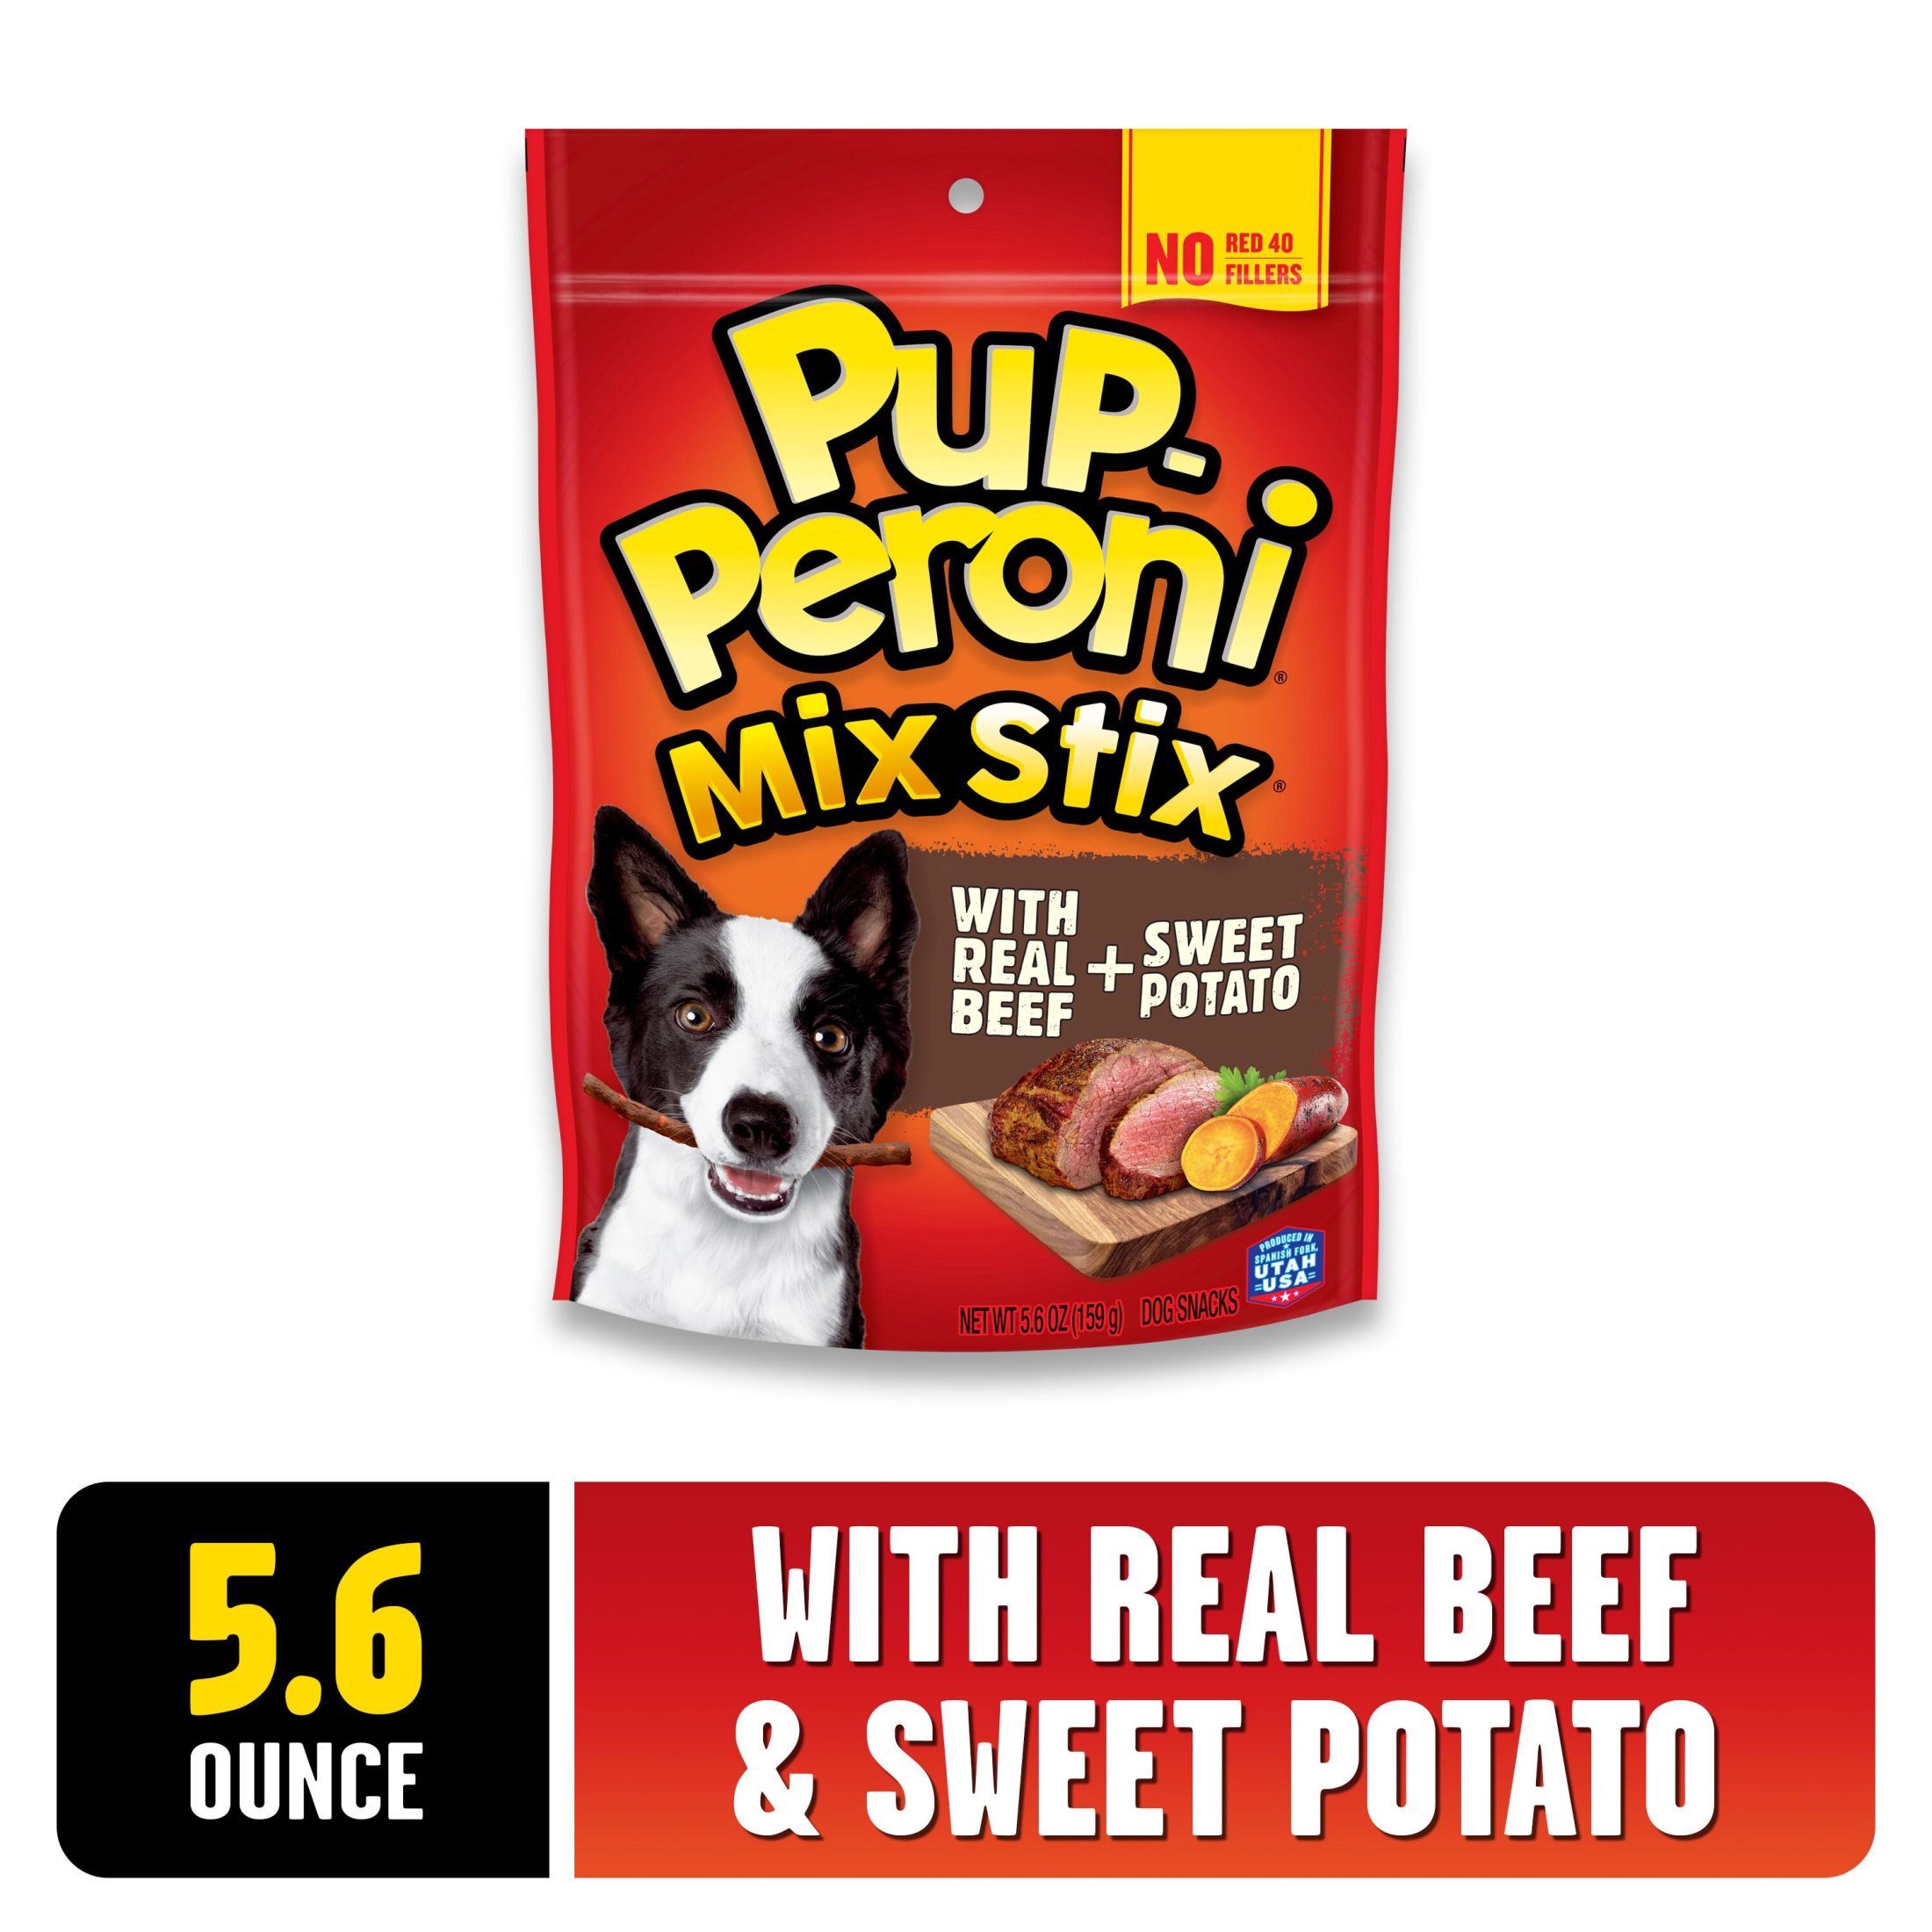 Pup-peroni Mix Stix with Real Beef and Sweet Potato Dog Treats, 5.6 oz Bag - image 3 of 9